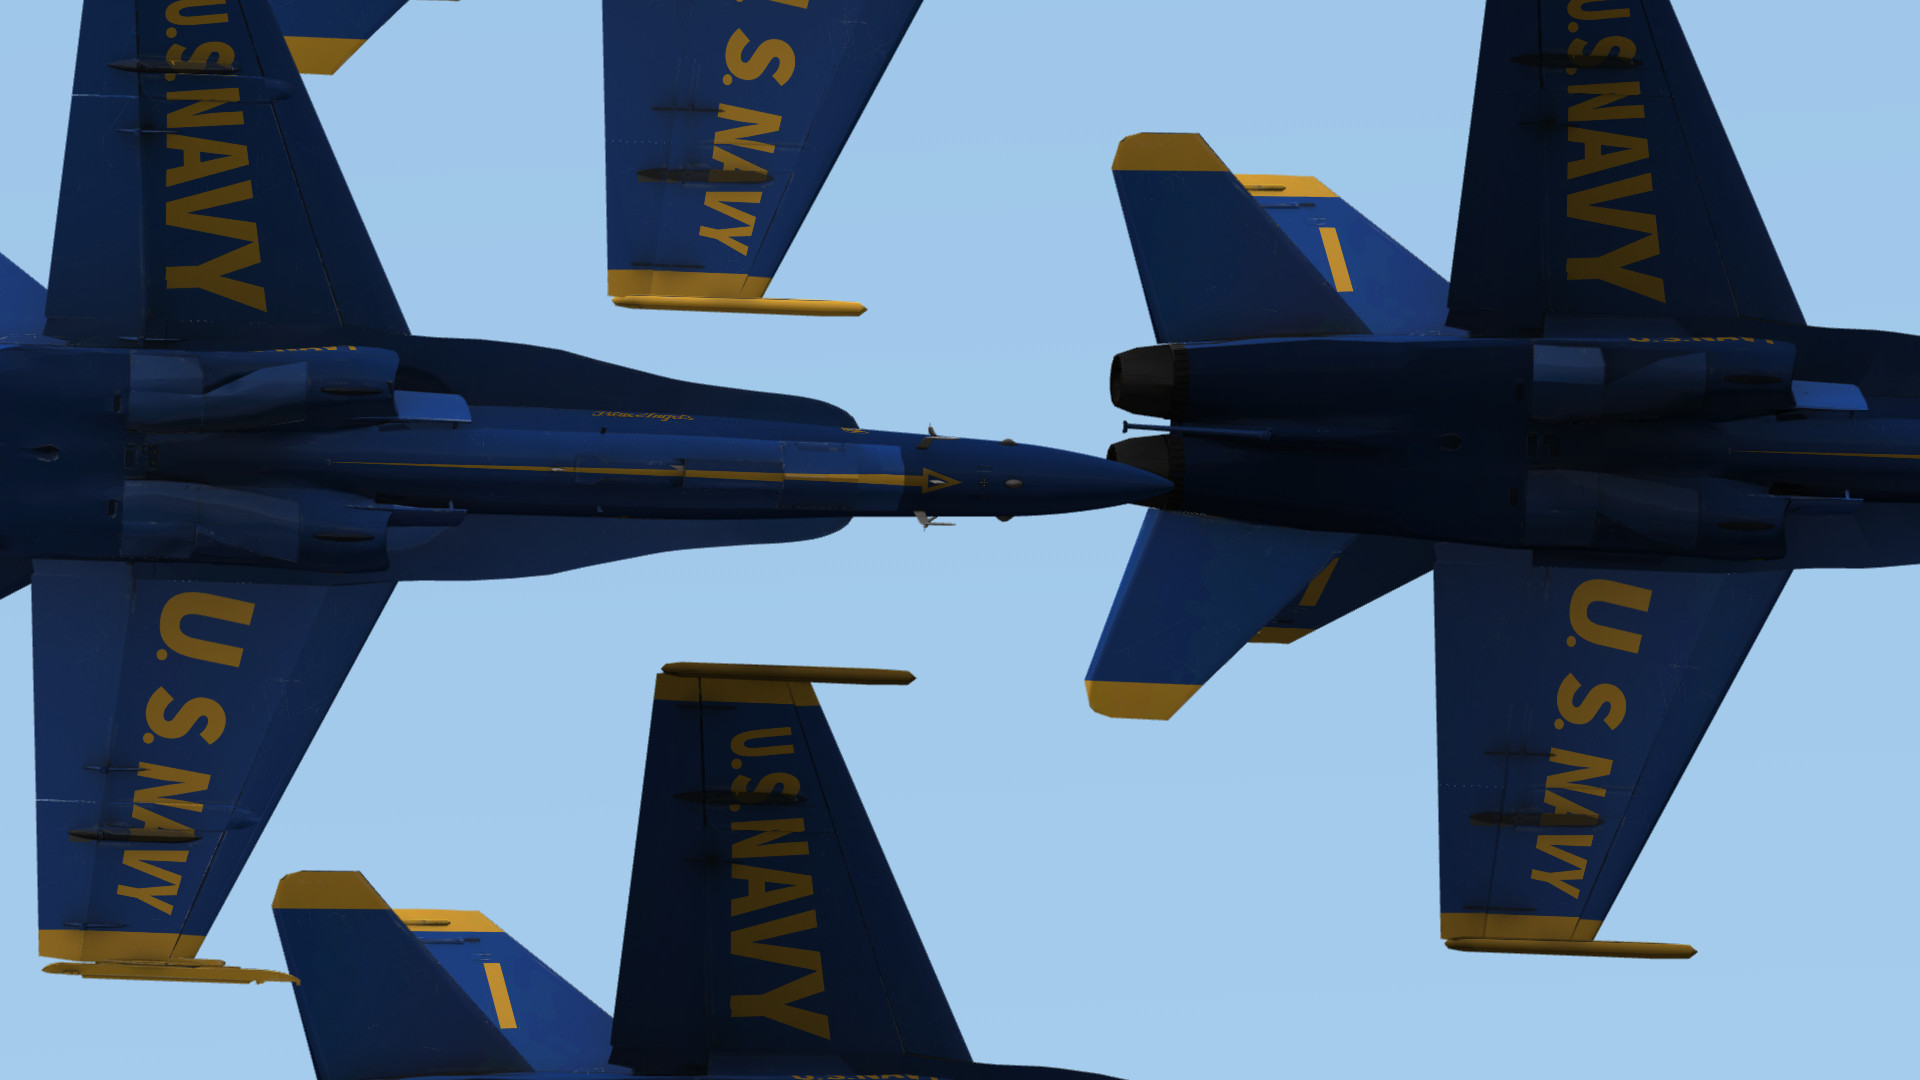 Blue Angels Aerobatic Flight Simulator, Presentation Trailer